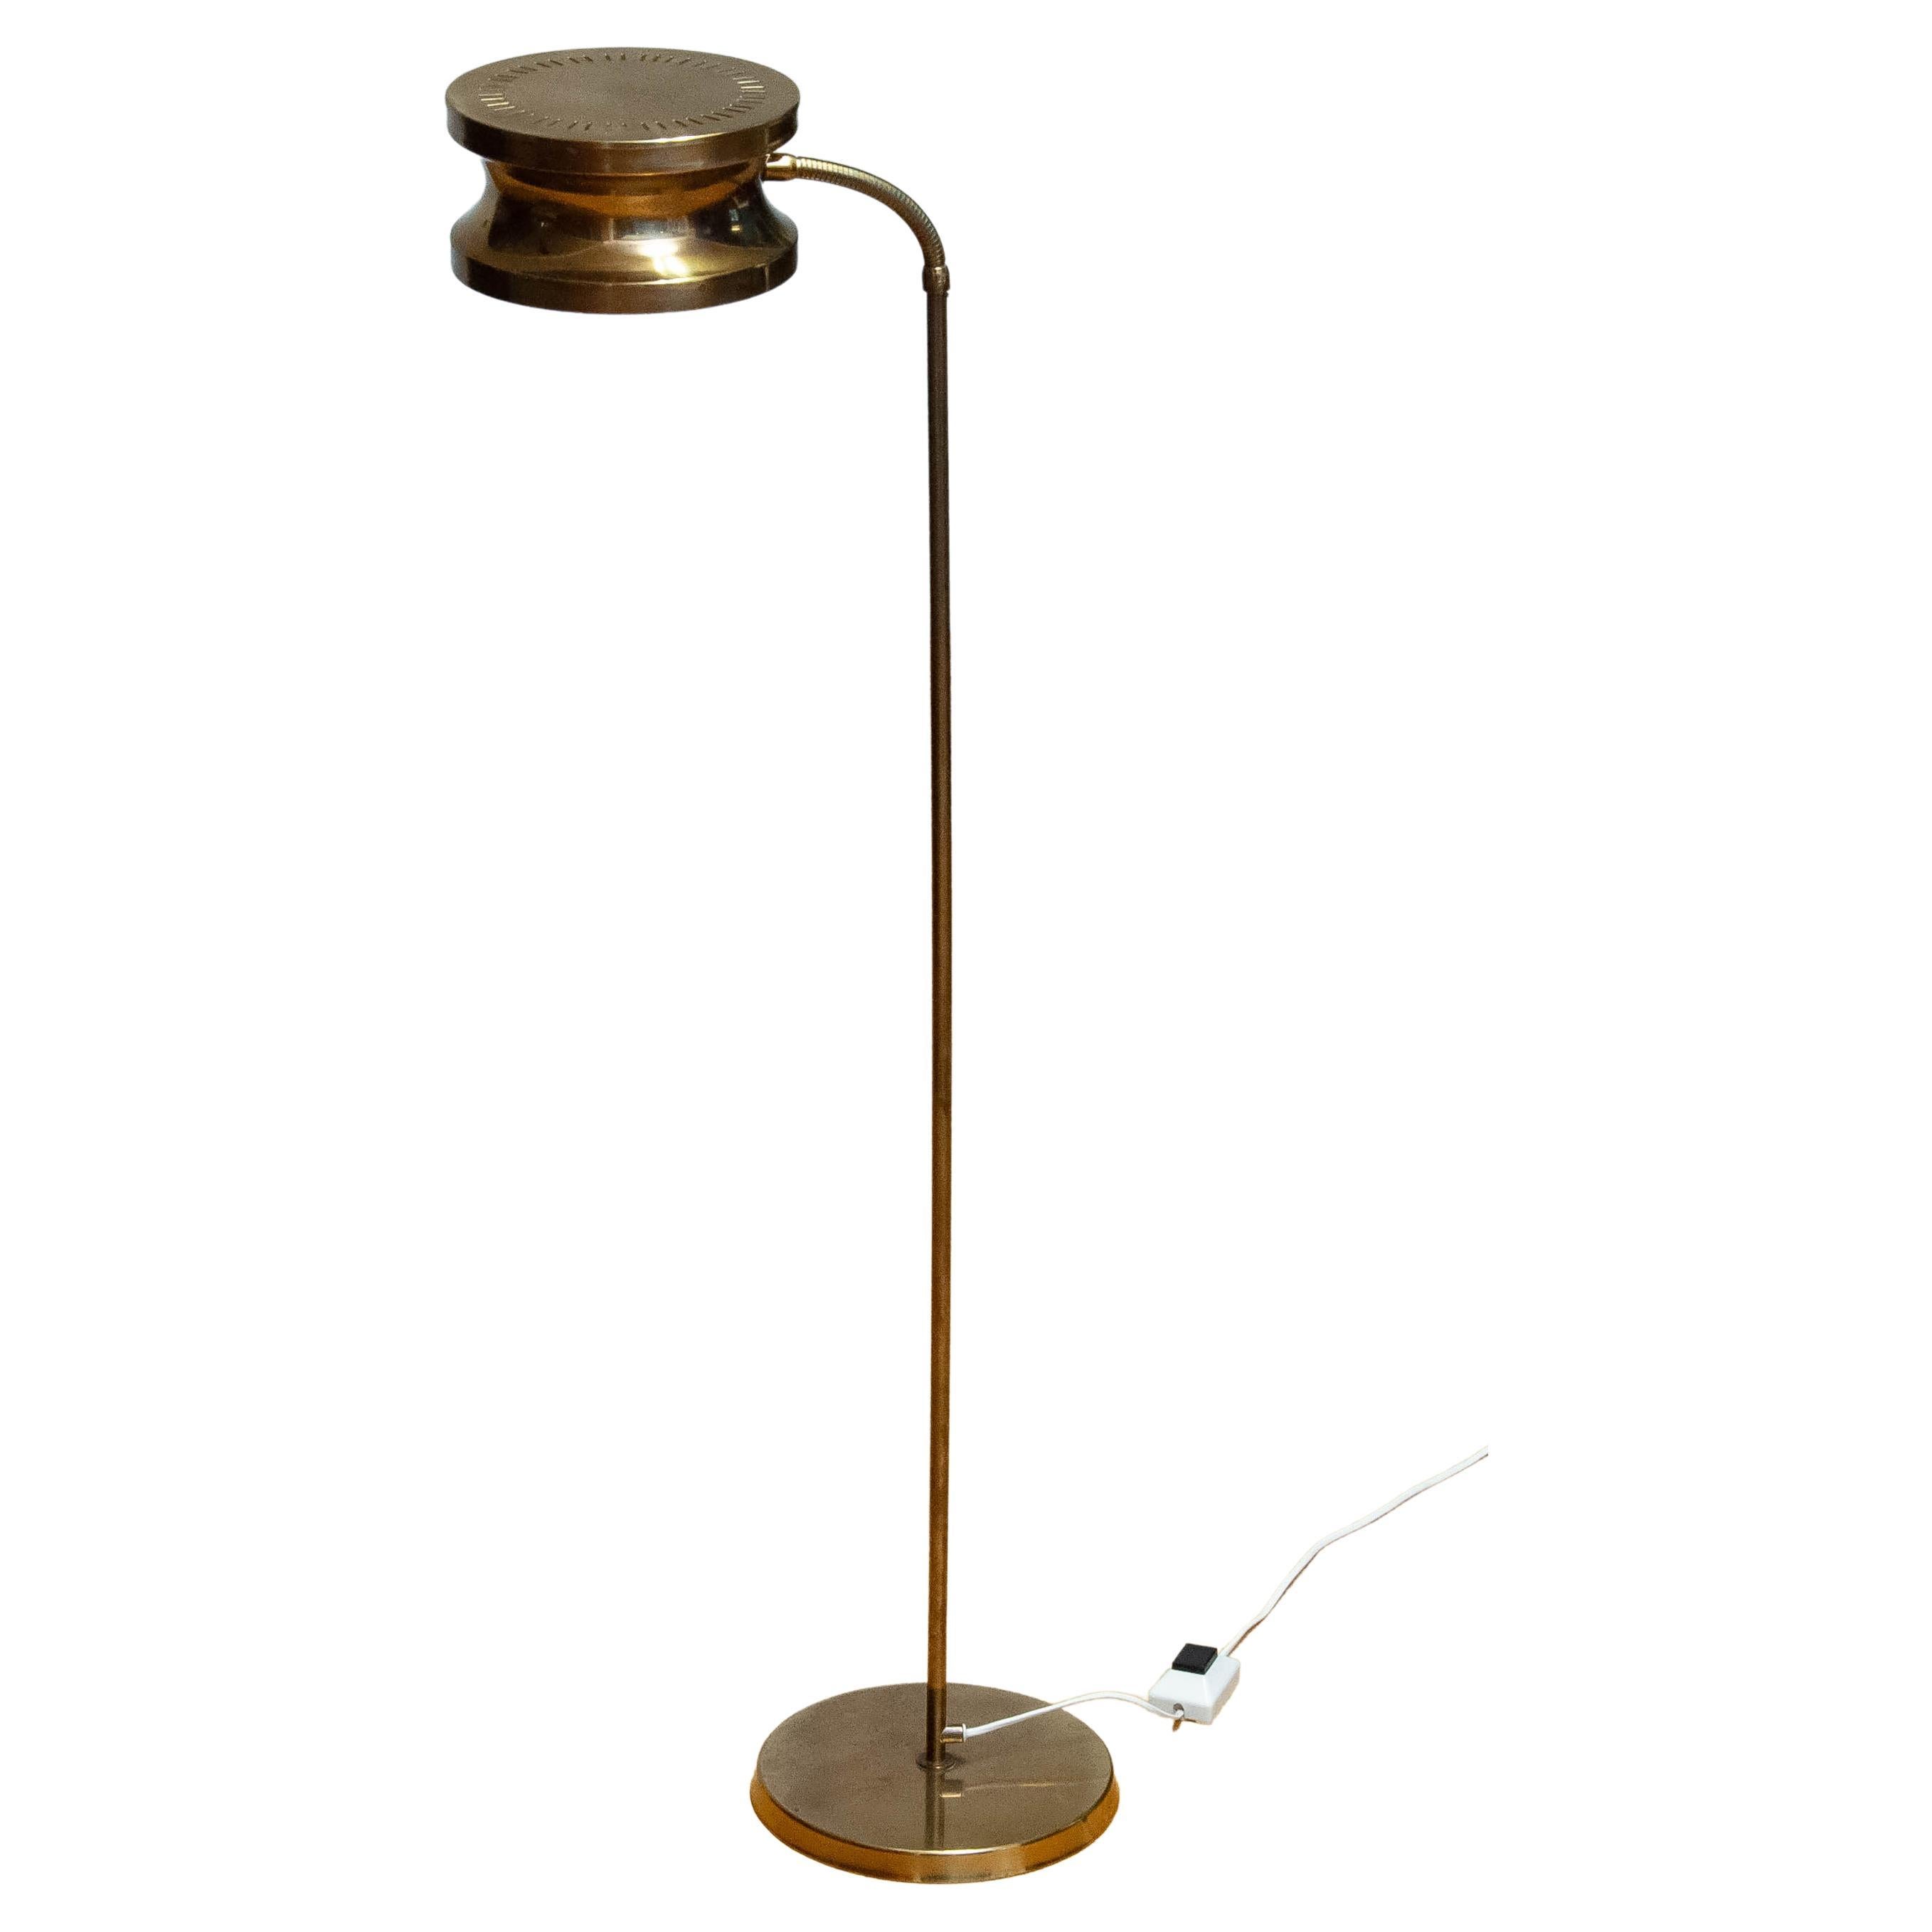 1970s Scandinavian Modern Floor Lamp In Brass By Tyringe Konsthantverk Sweden For Sale